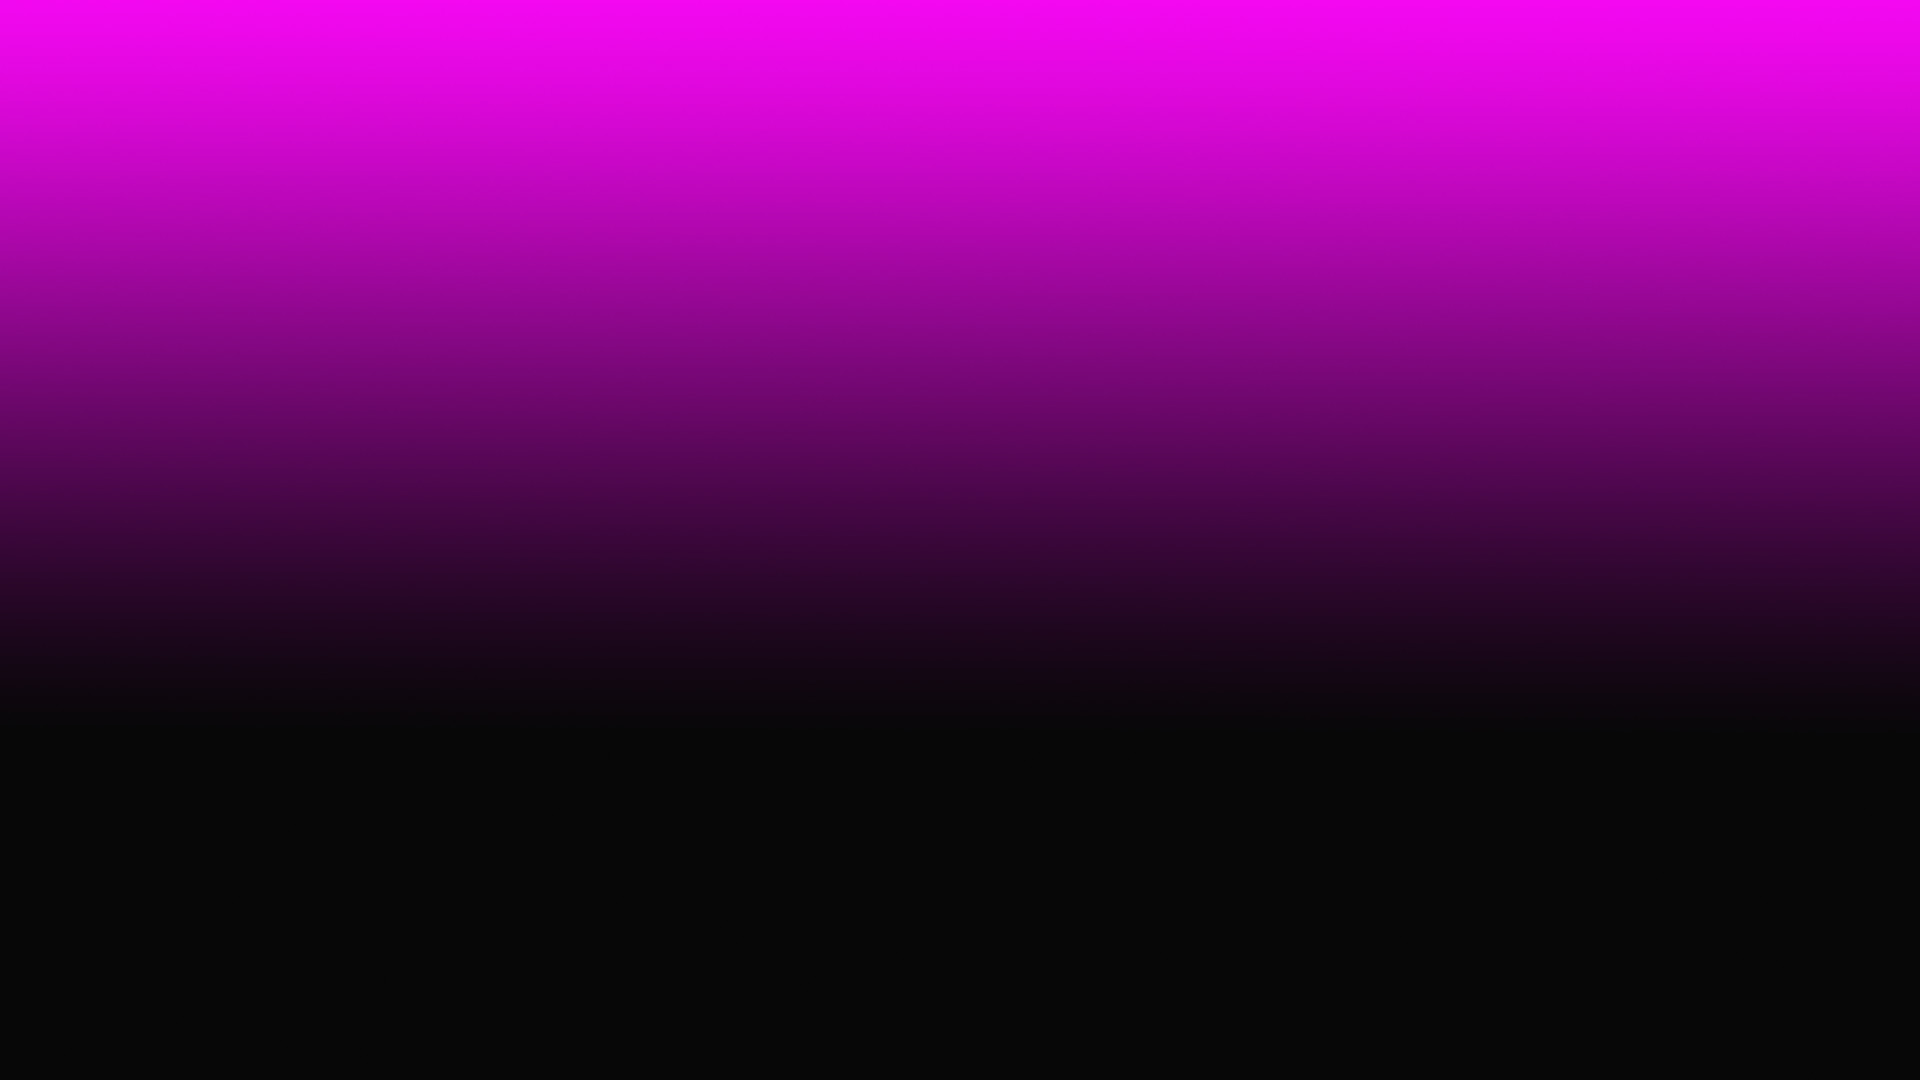 1920x1080 Pink And Black Backgrounds For Desktop - Wallpaper Cave